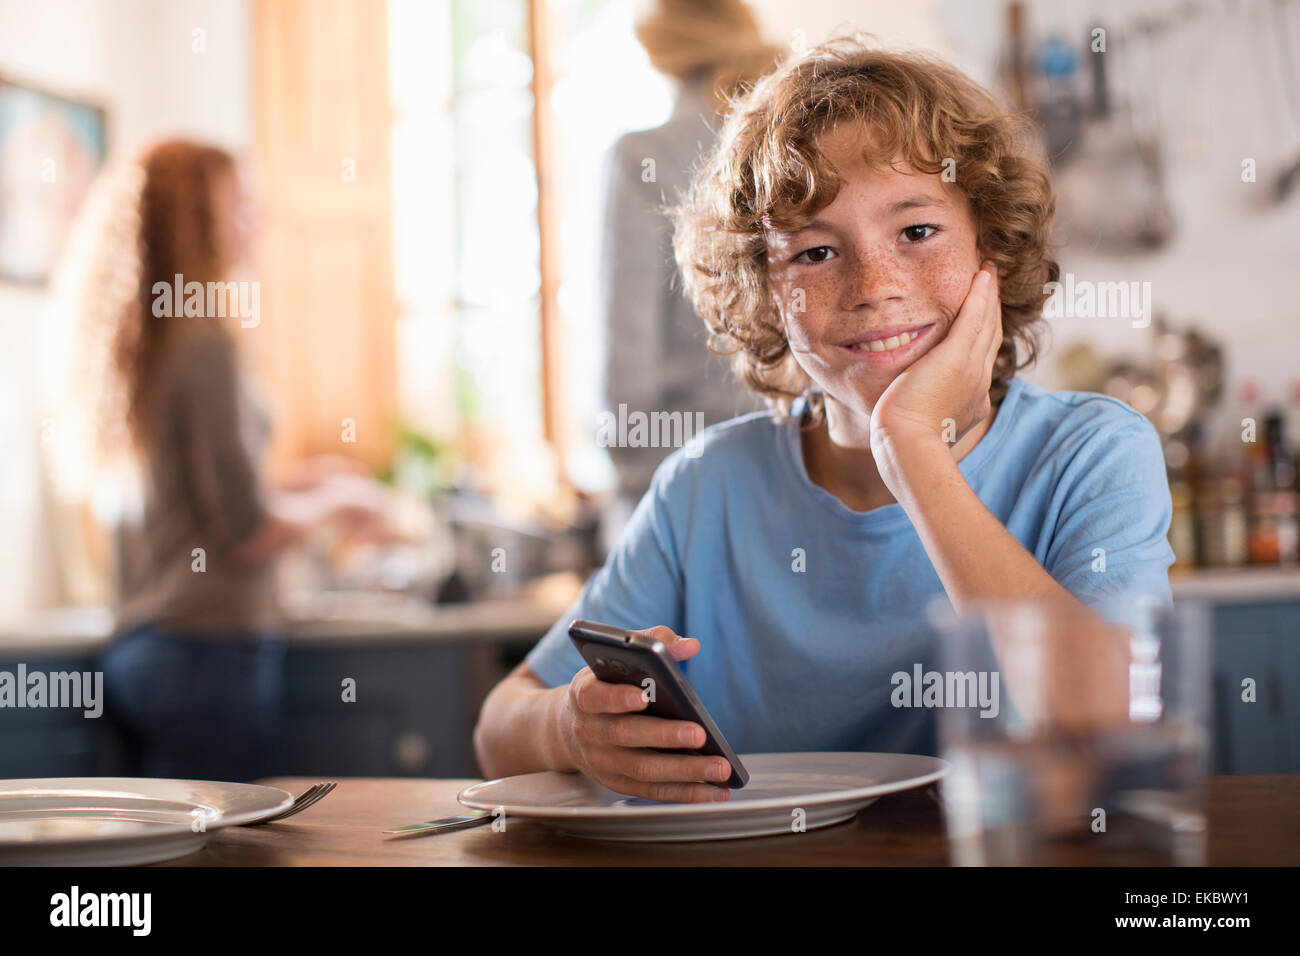 Teenage boy holding smartphone à table à manger Banque D'Images